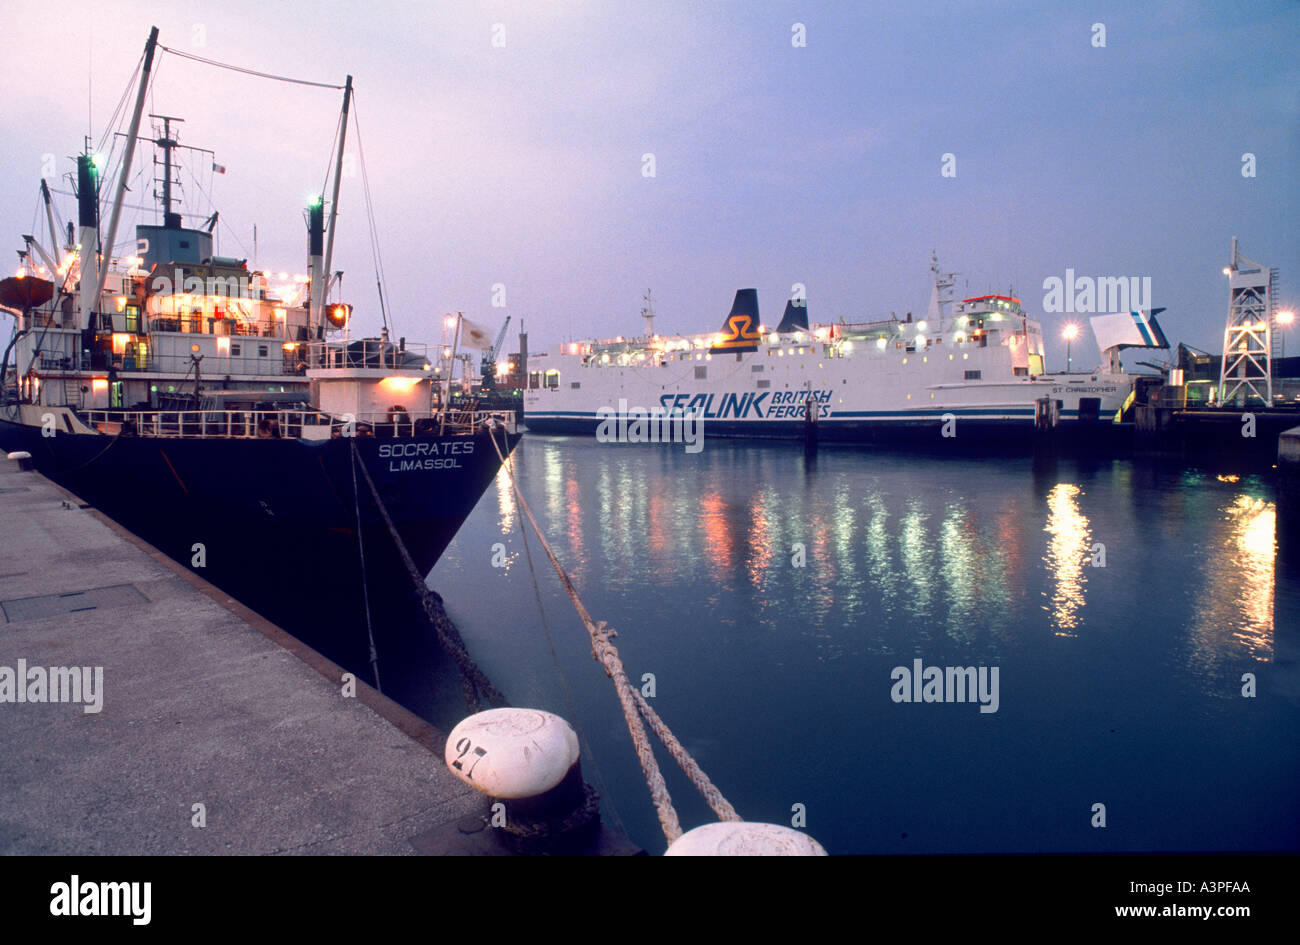 Calais, North of France, Port with Ships at Dusk Moorings Stock Photo